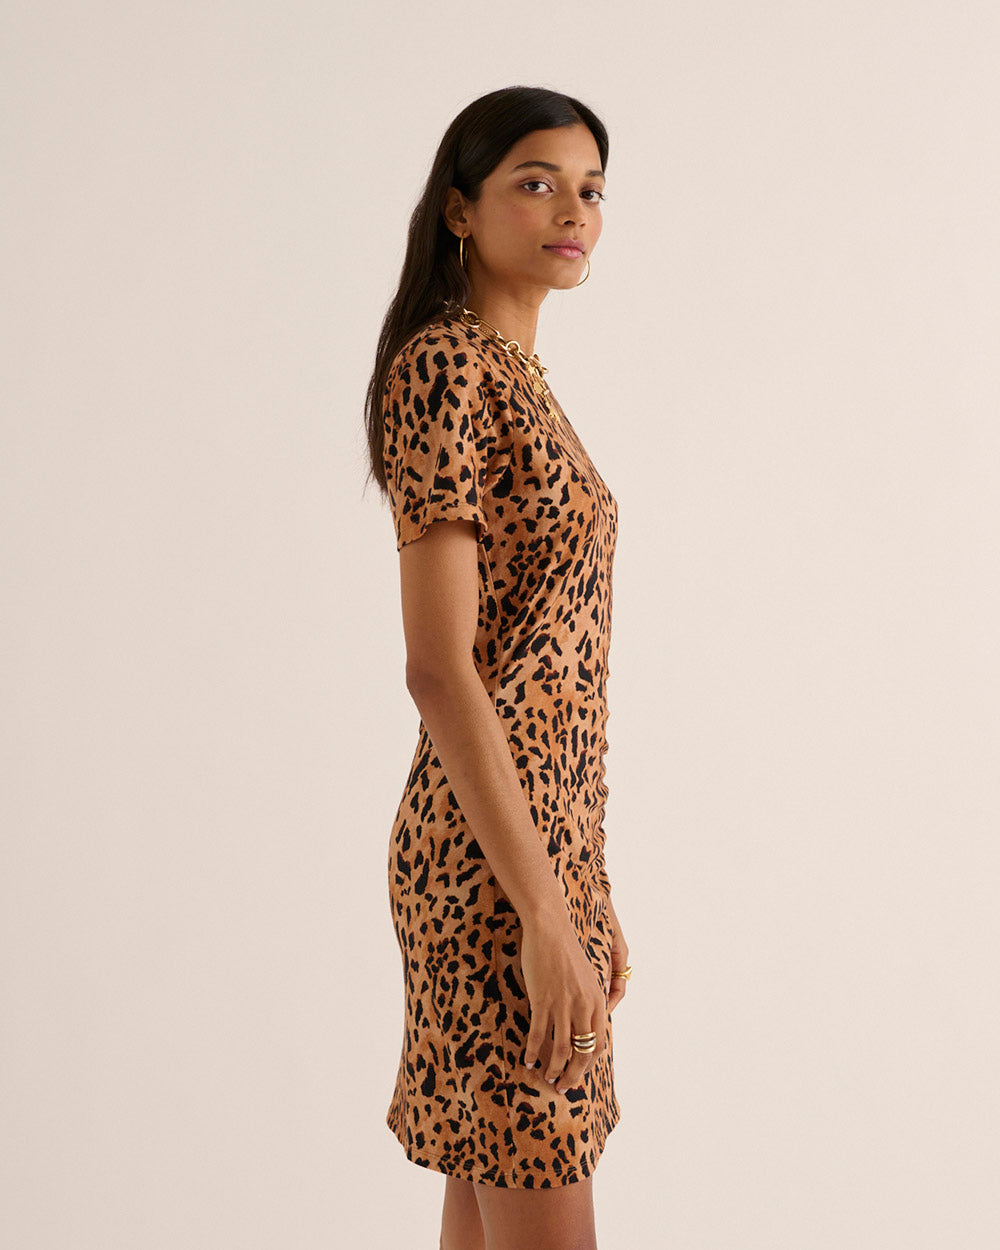 Floréal cheetah cappuccino dress